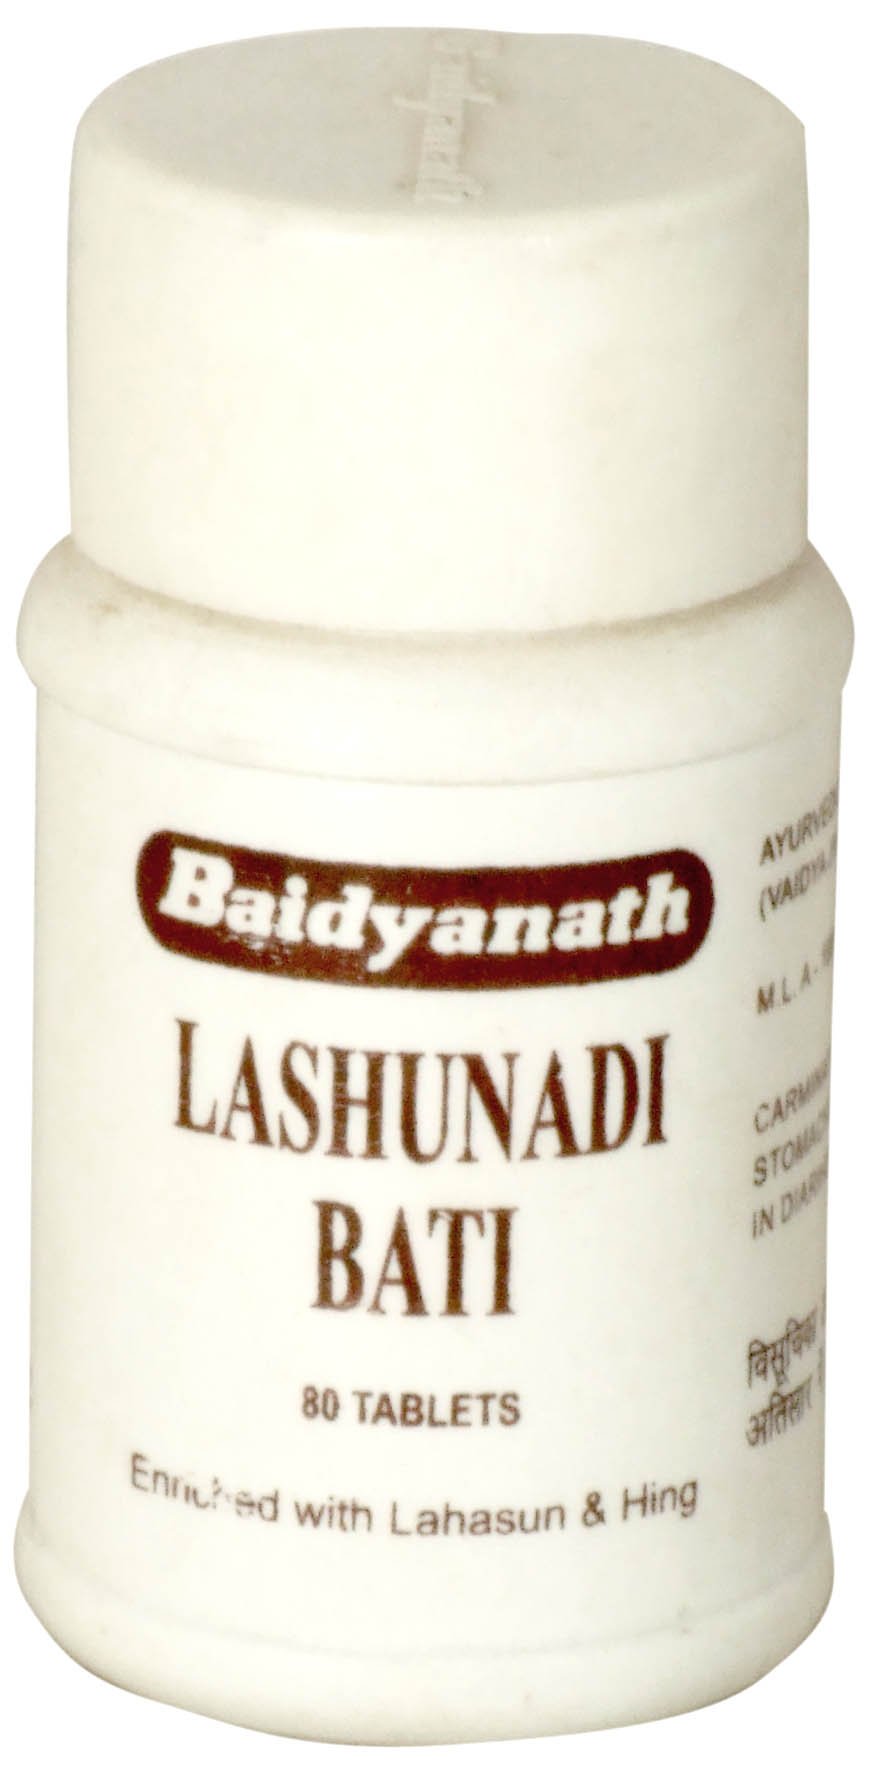 Lashunadi Bati Tablets (Enriched with Lahasun & Hing) - book cover